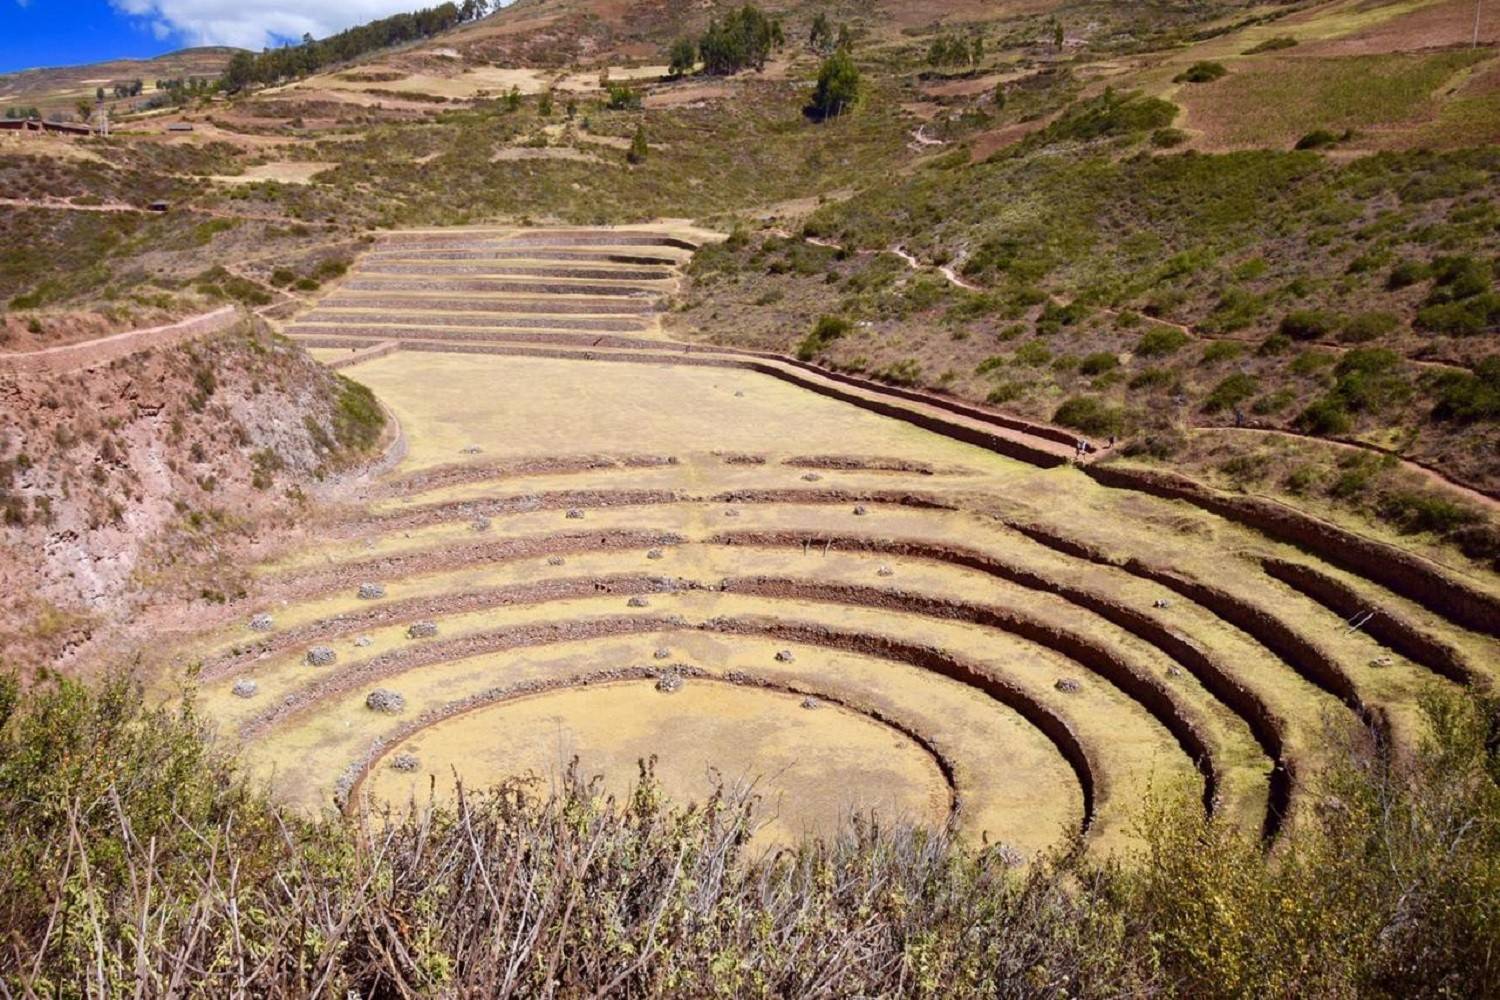 Visita al valle sagrado – Chinchero, Maras, Moray e Ollantaytambo + tren a Aguas Calientes